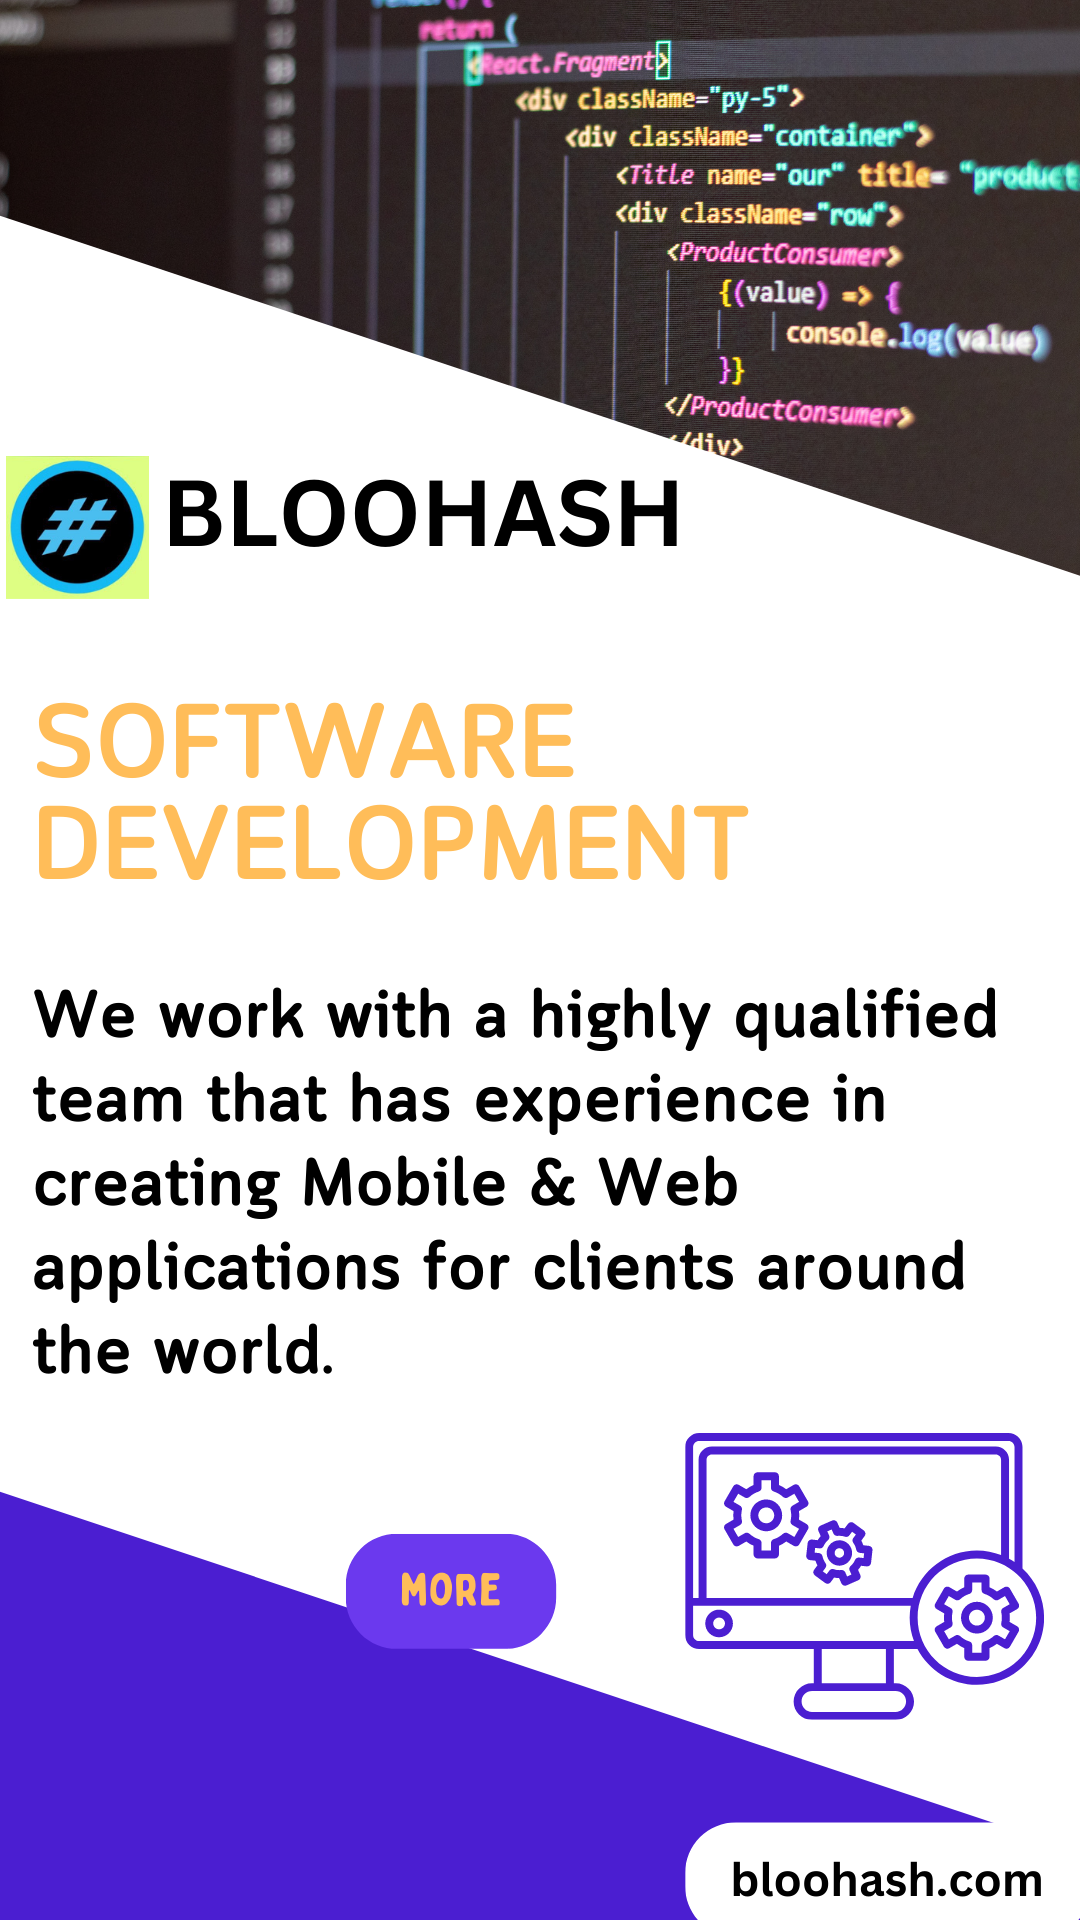  Software Development Company in India- Bloohash